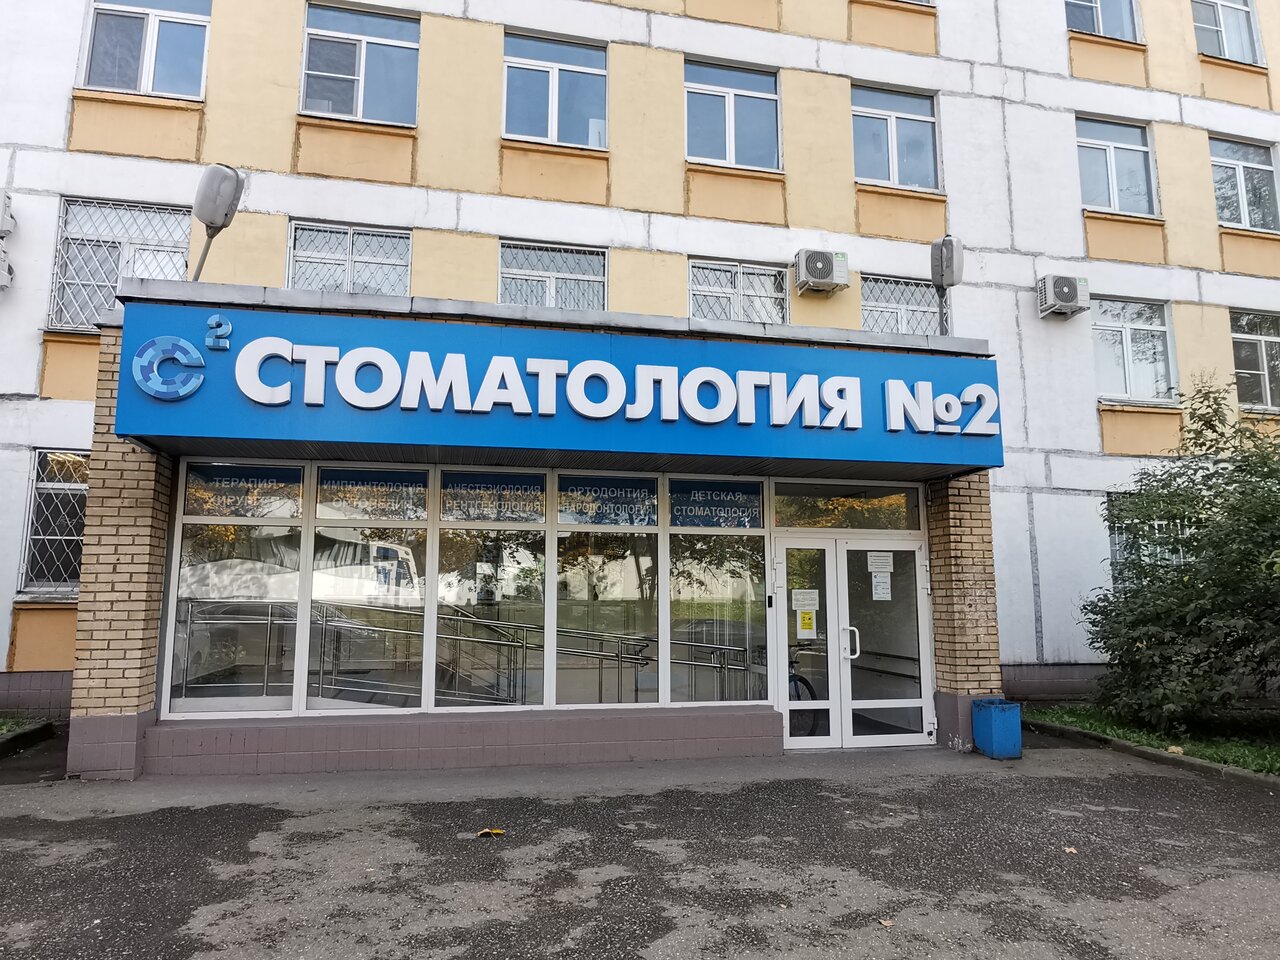 Стоматология №2 - Yull.ru